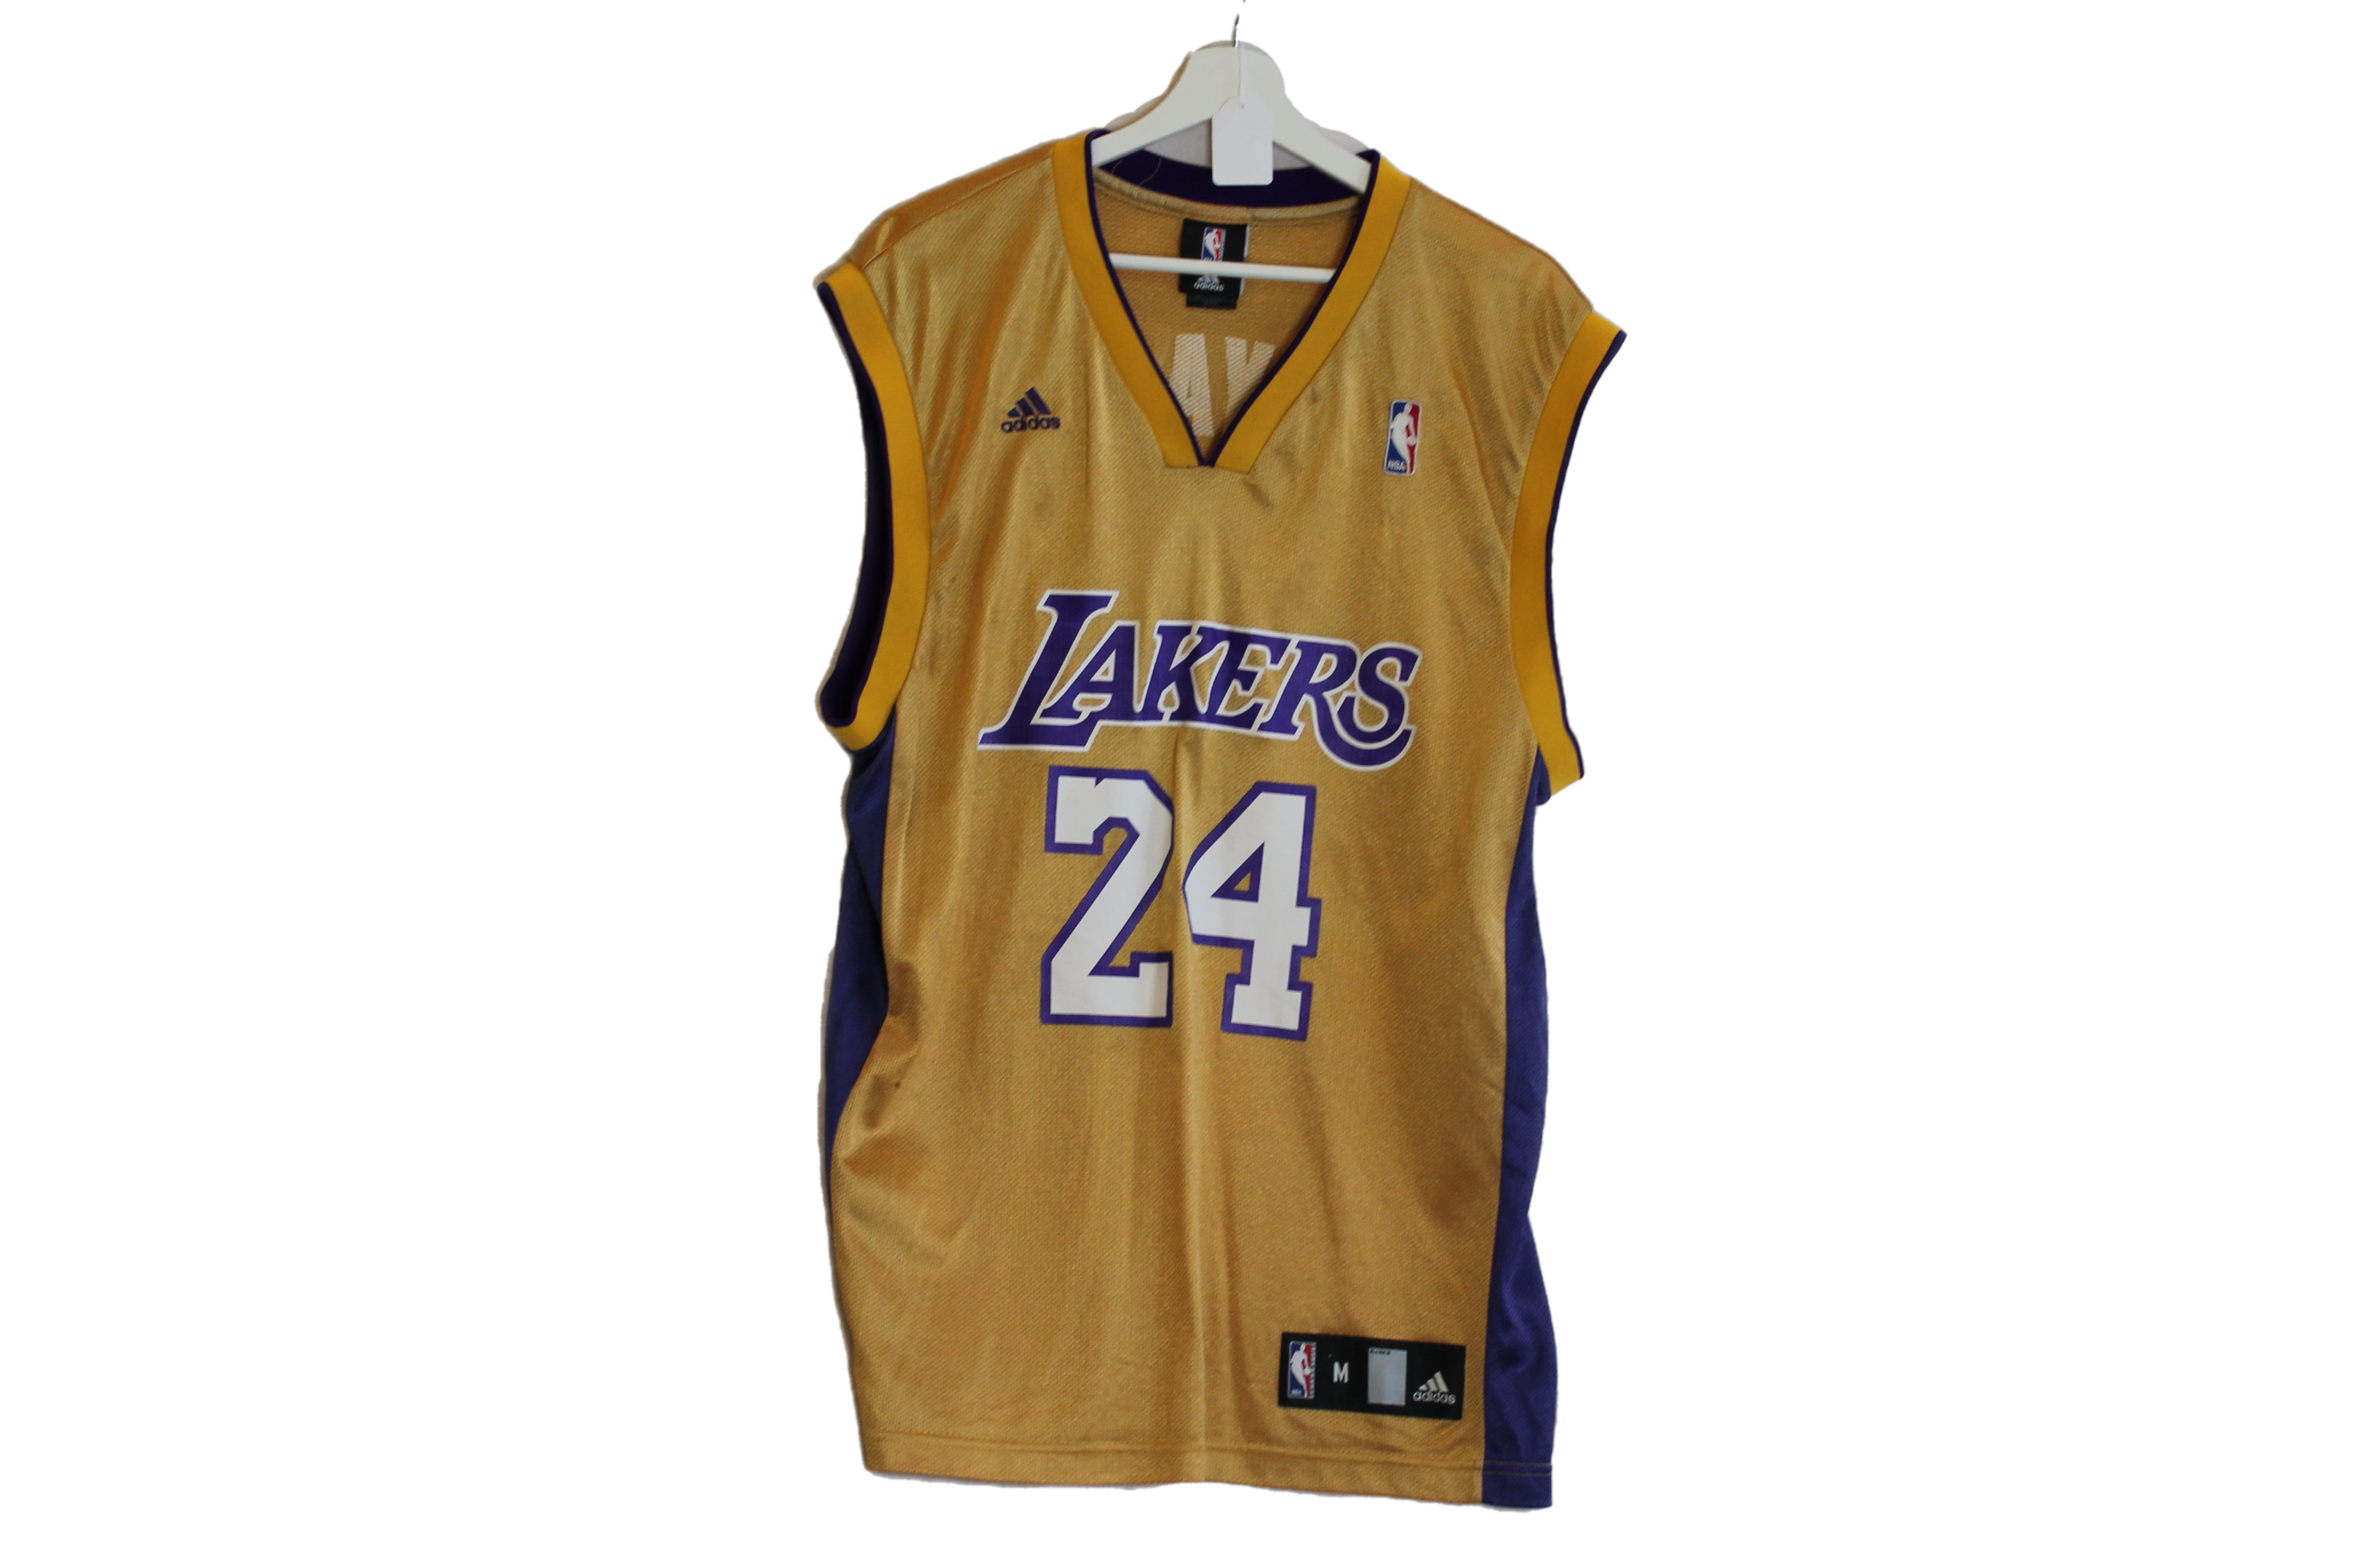 Lakers - size m, l